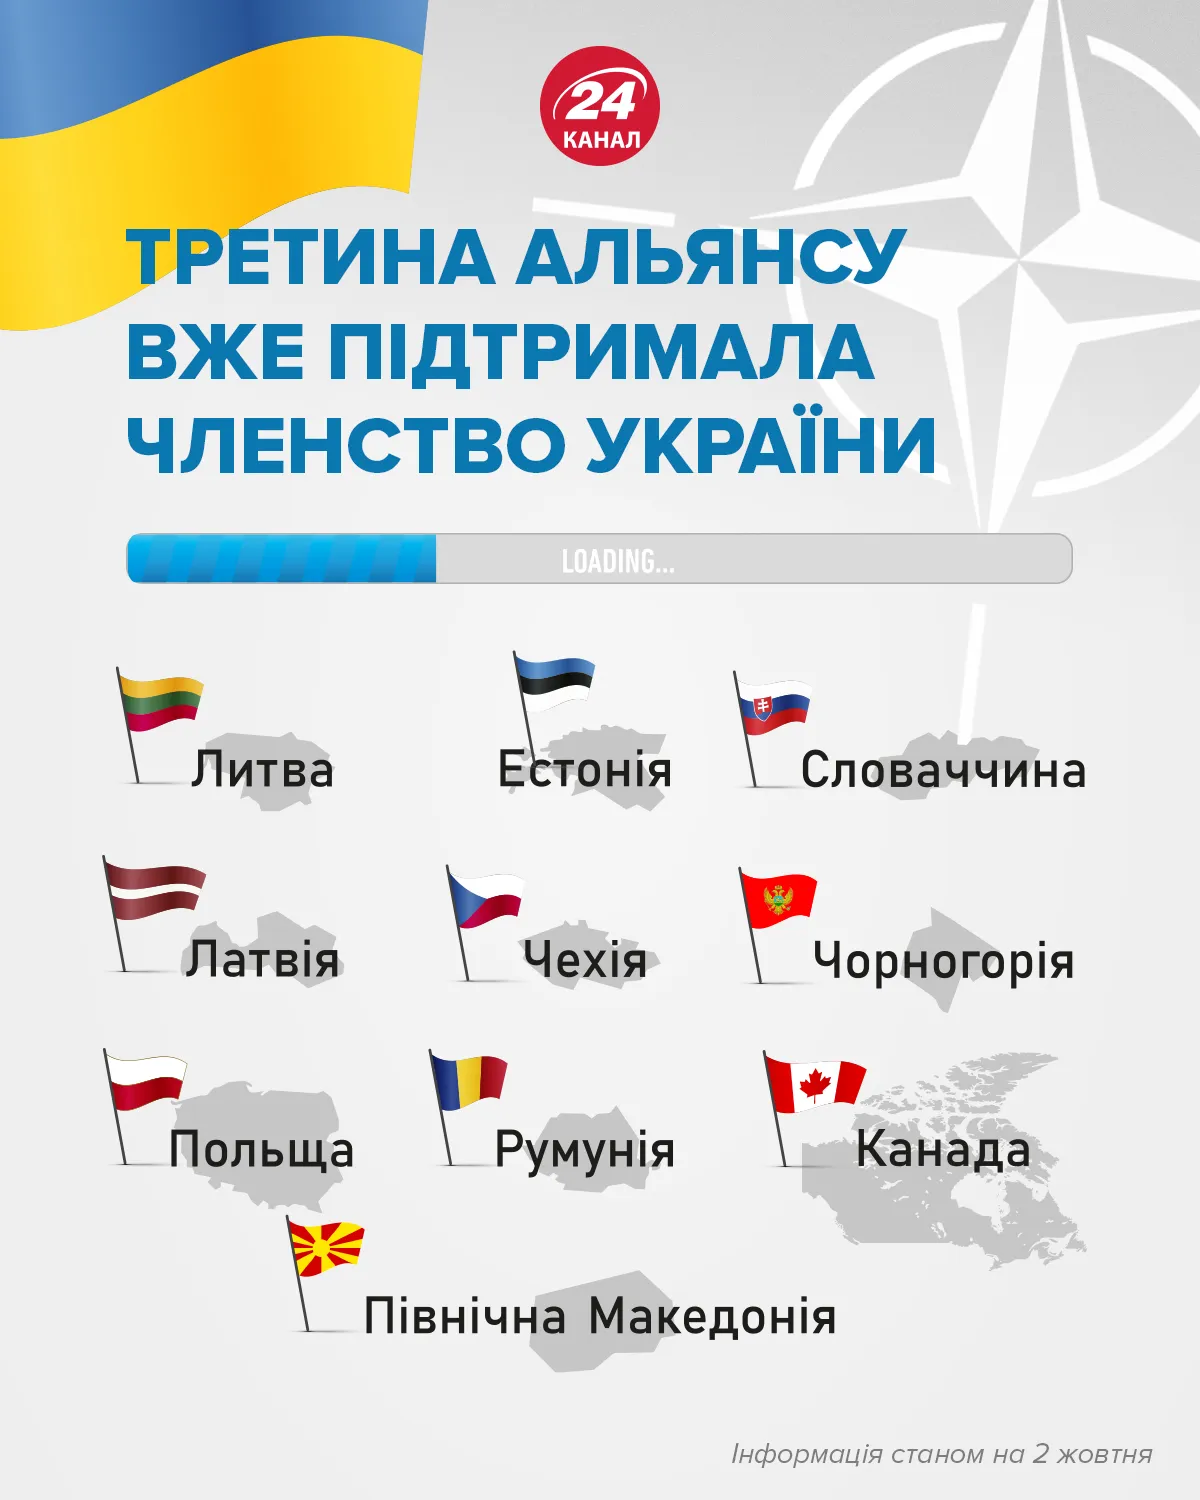 Третина Альянсу підтримала членство України 